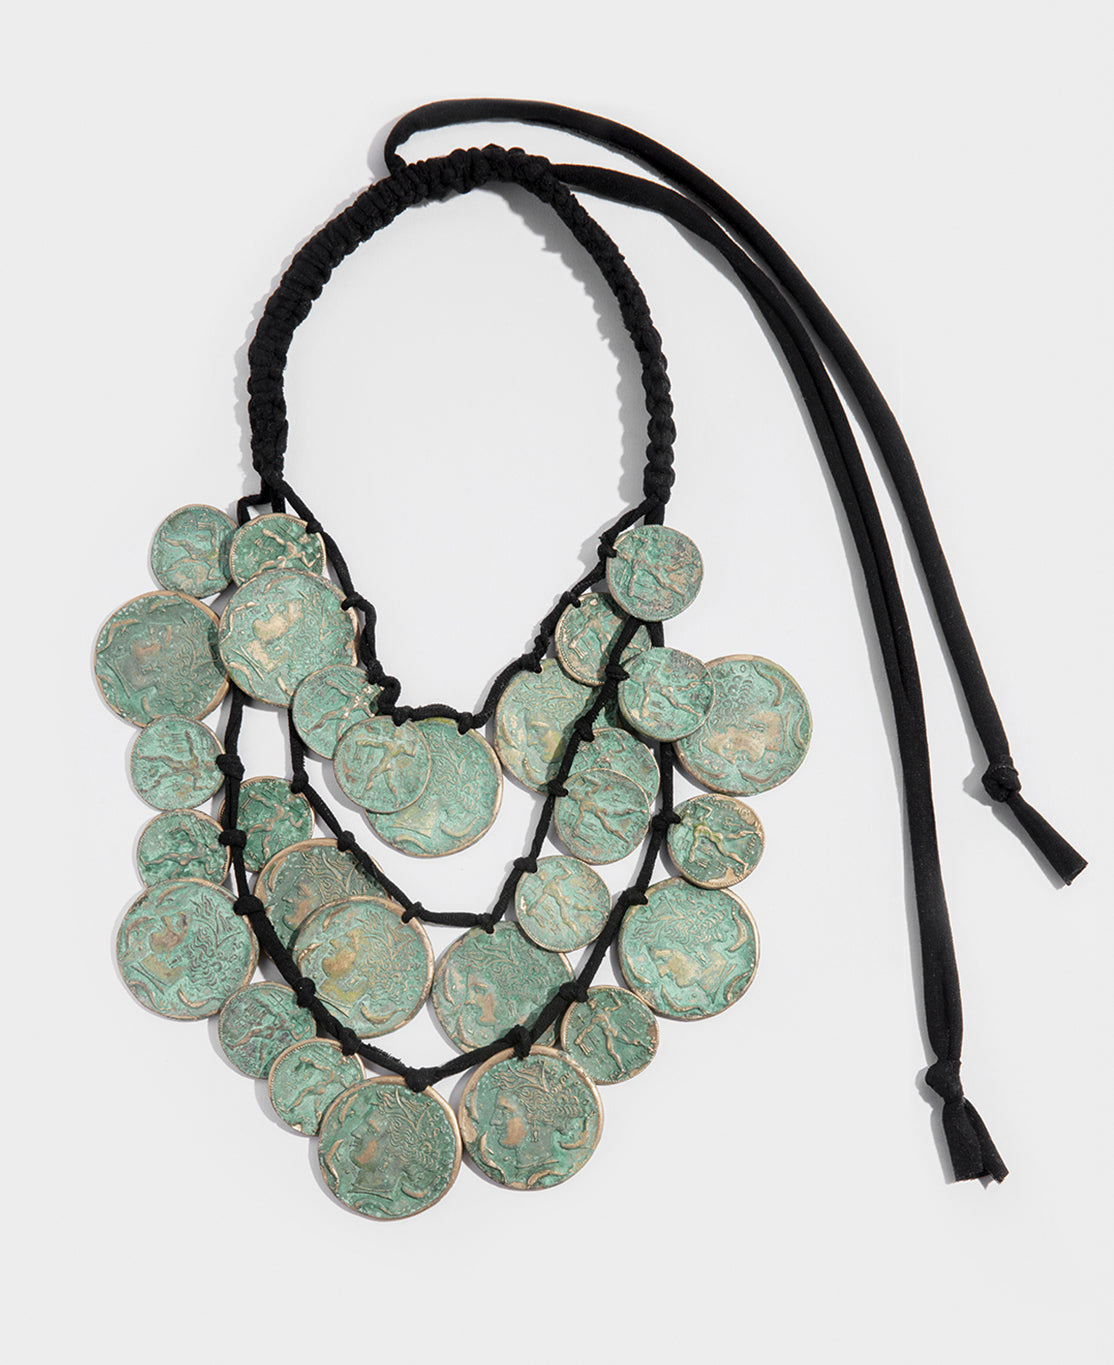 Ancient Greek necklace